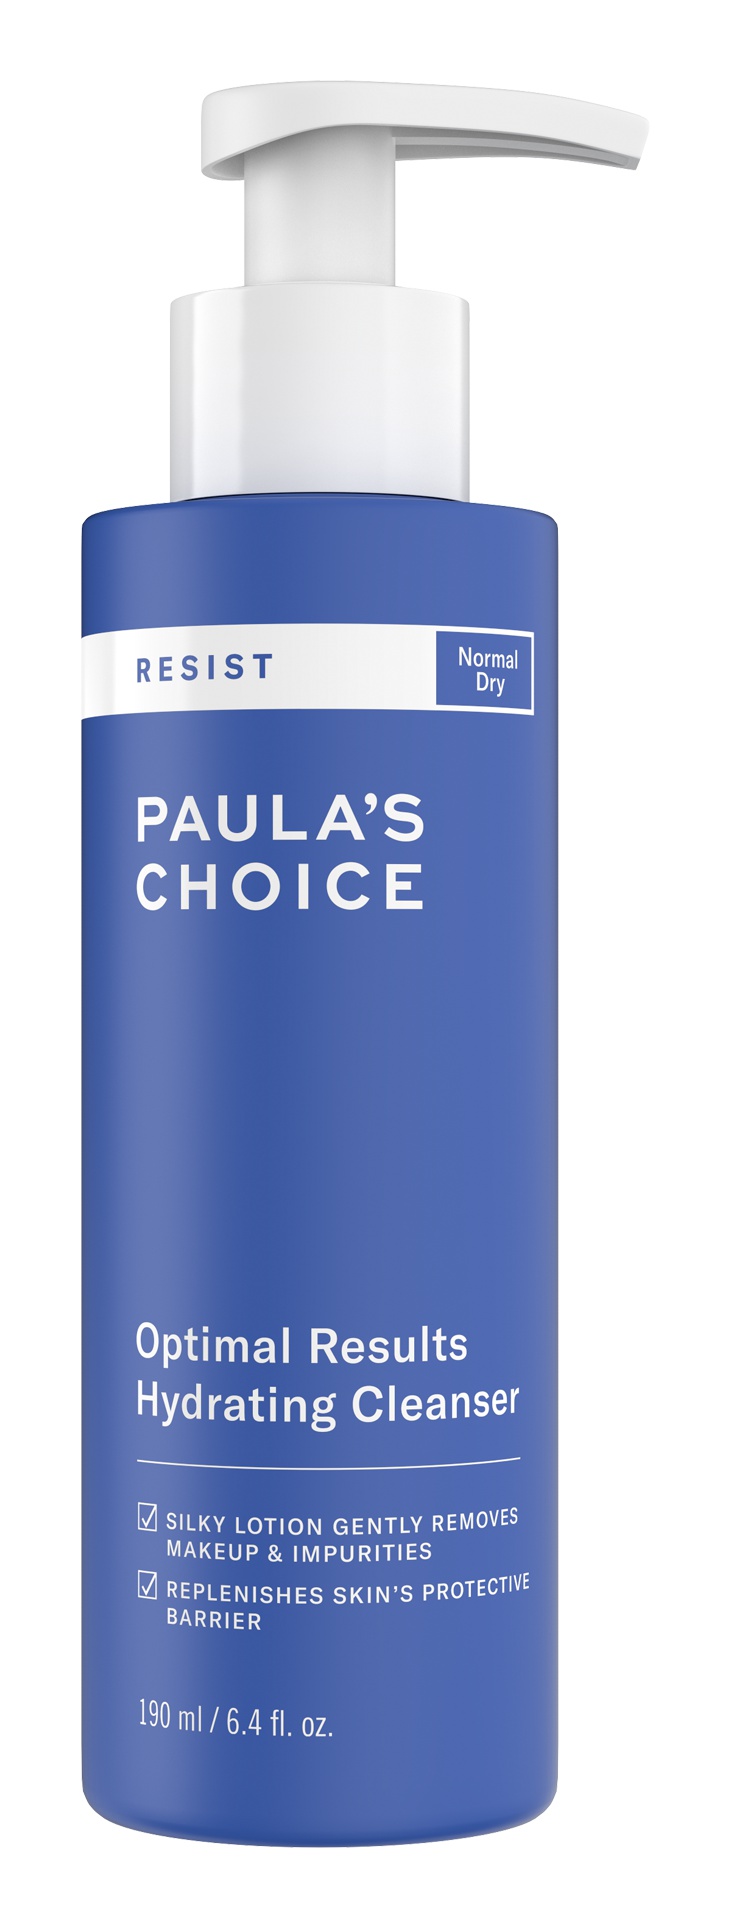 Paula's Choice Resist Anti-Aging Hydrating Cleanser